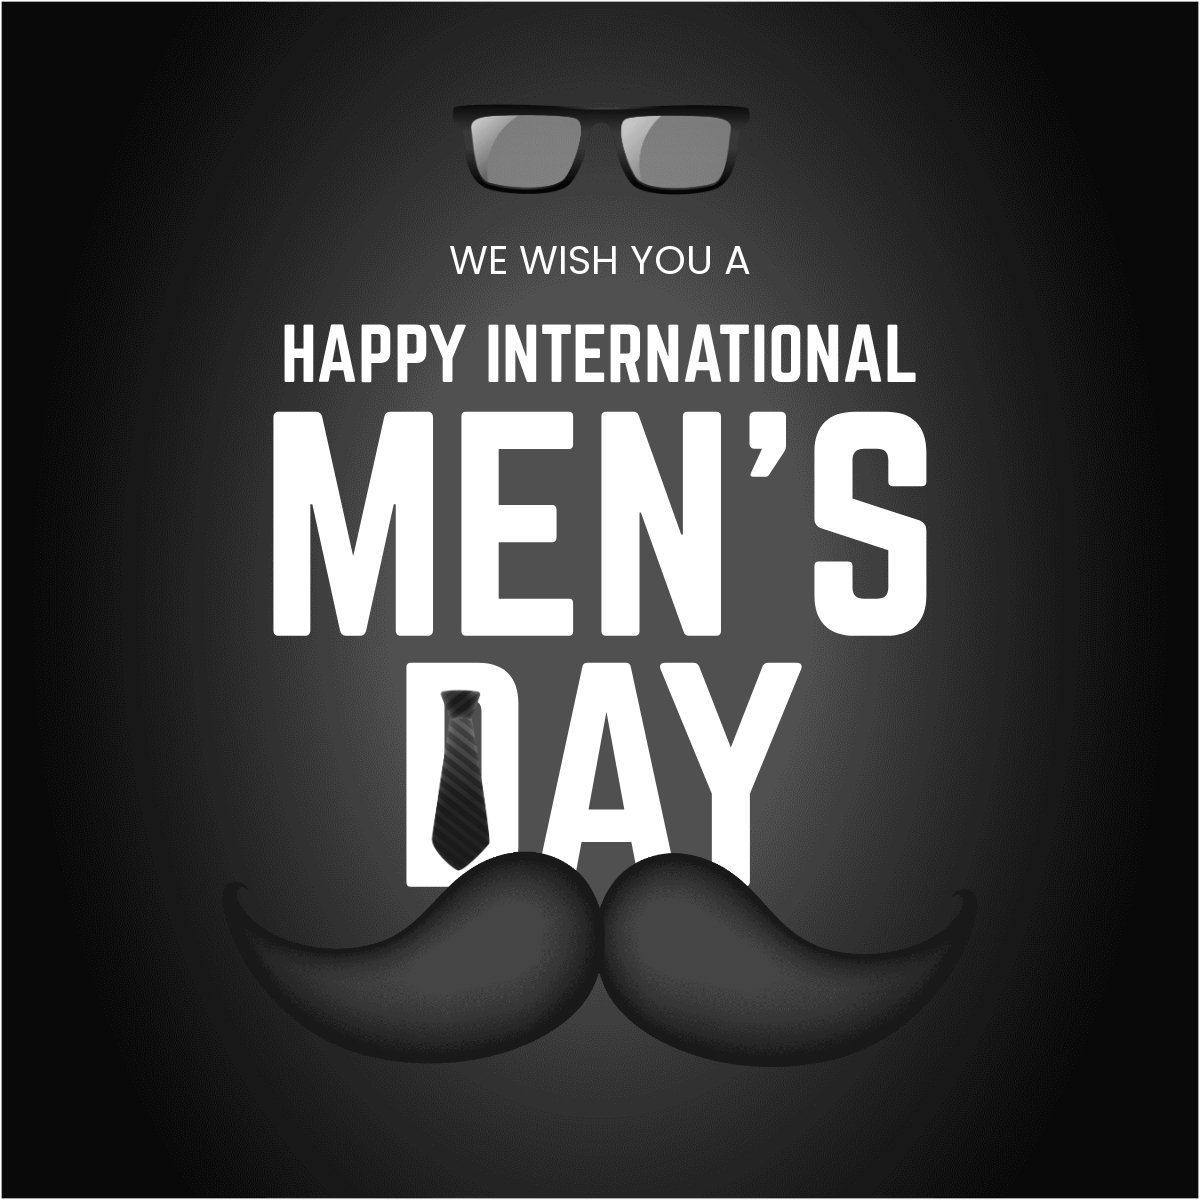 International Mens Day Wishes Linkedin Post